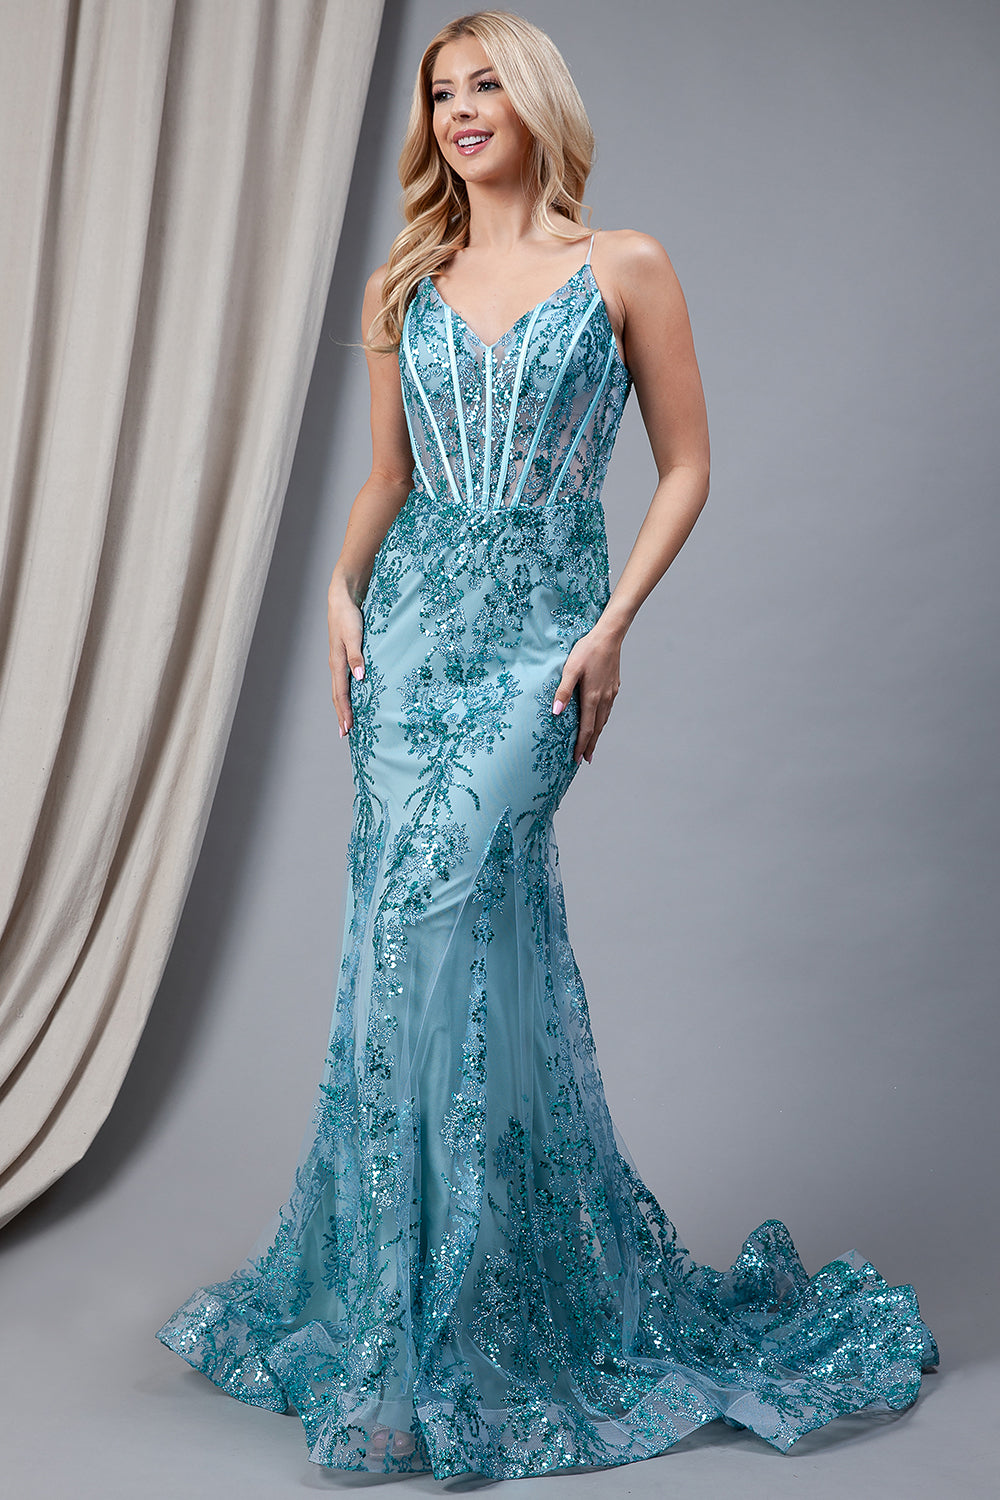 Mermaid Wedding Dress with Dramatic Silhouette